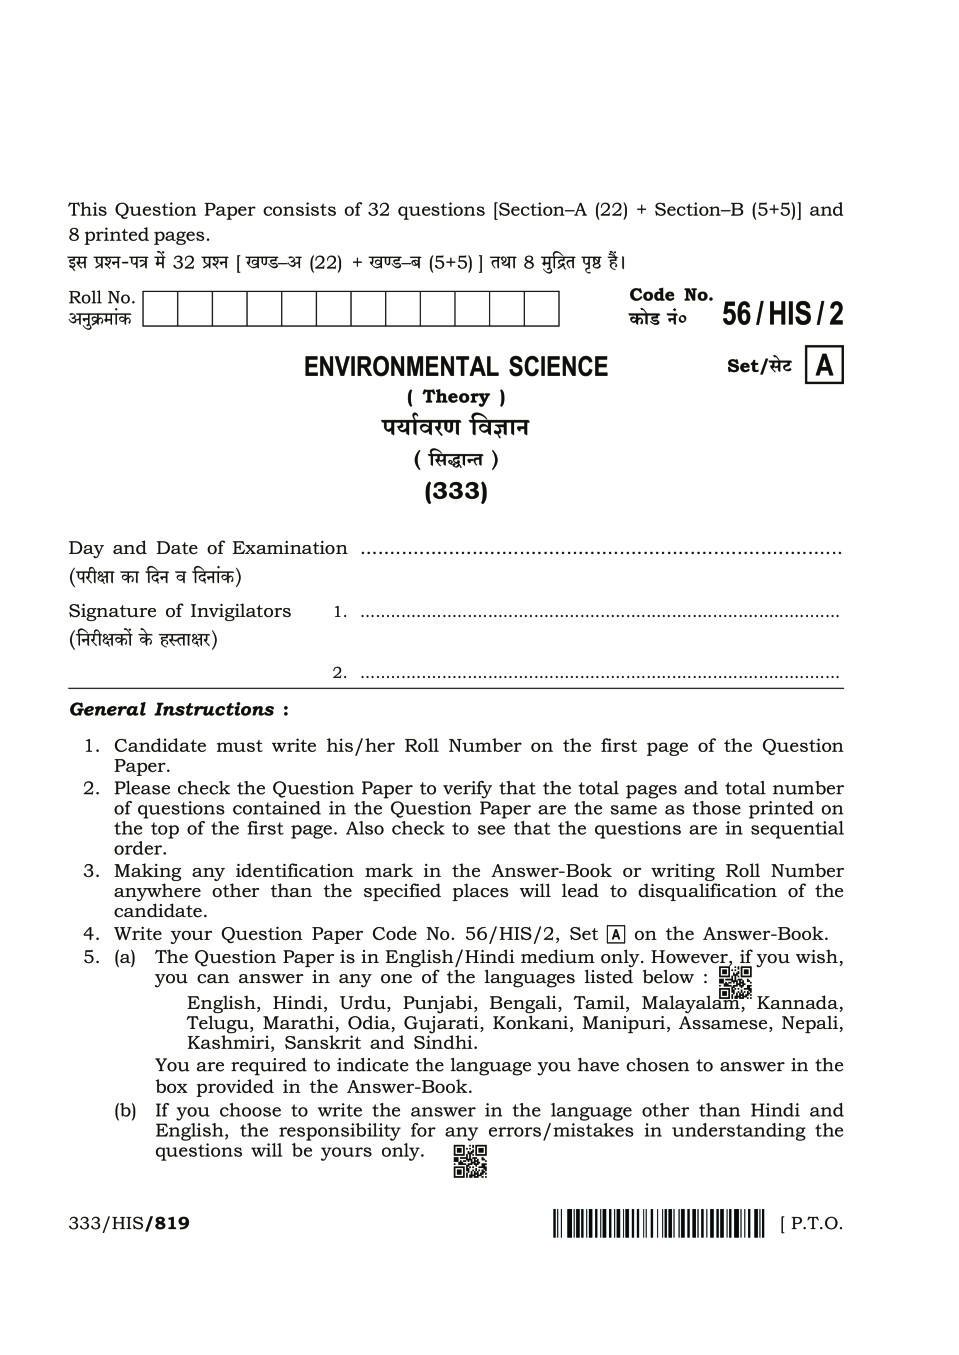 NIOS Class 12 Question Paper Apr 2018 - Environmental Science - Page 1